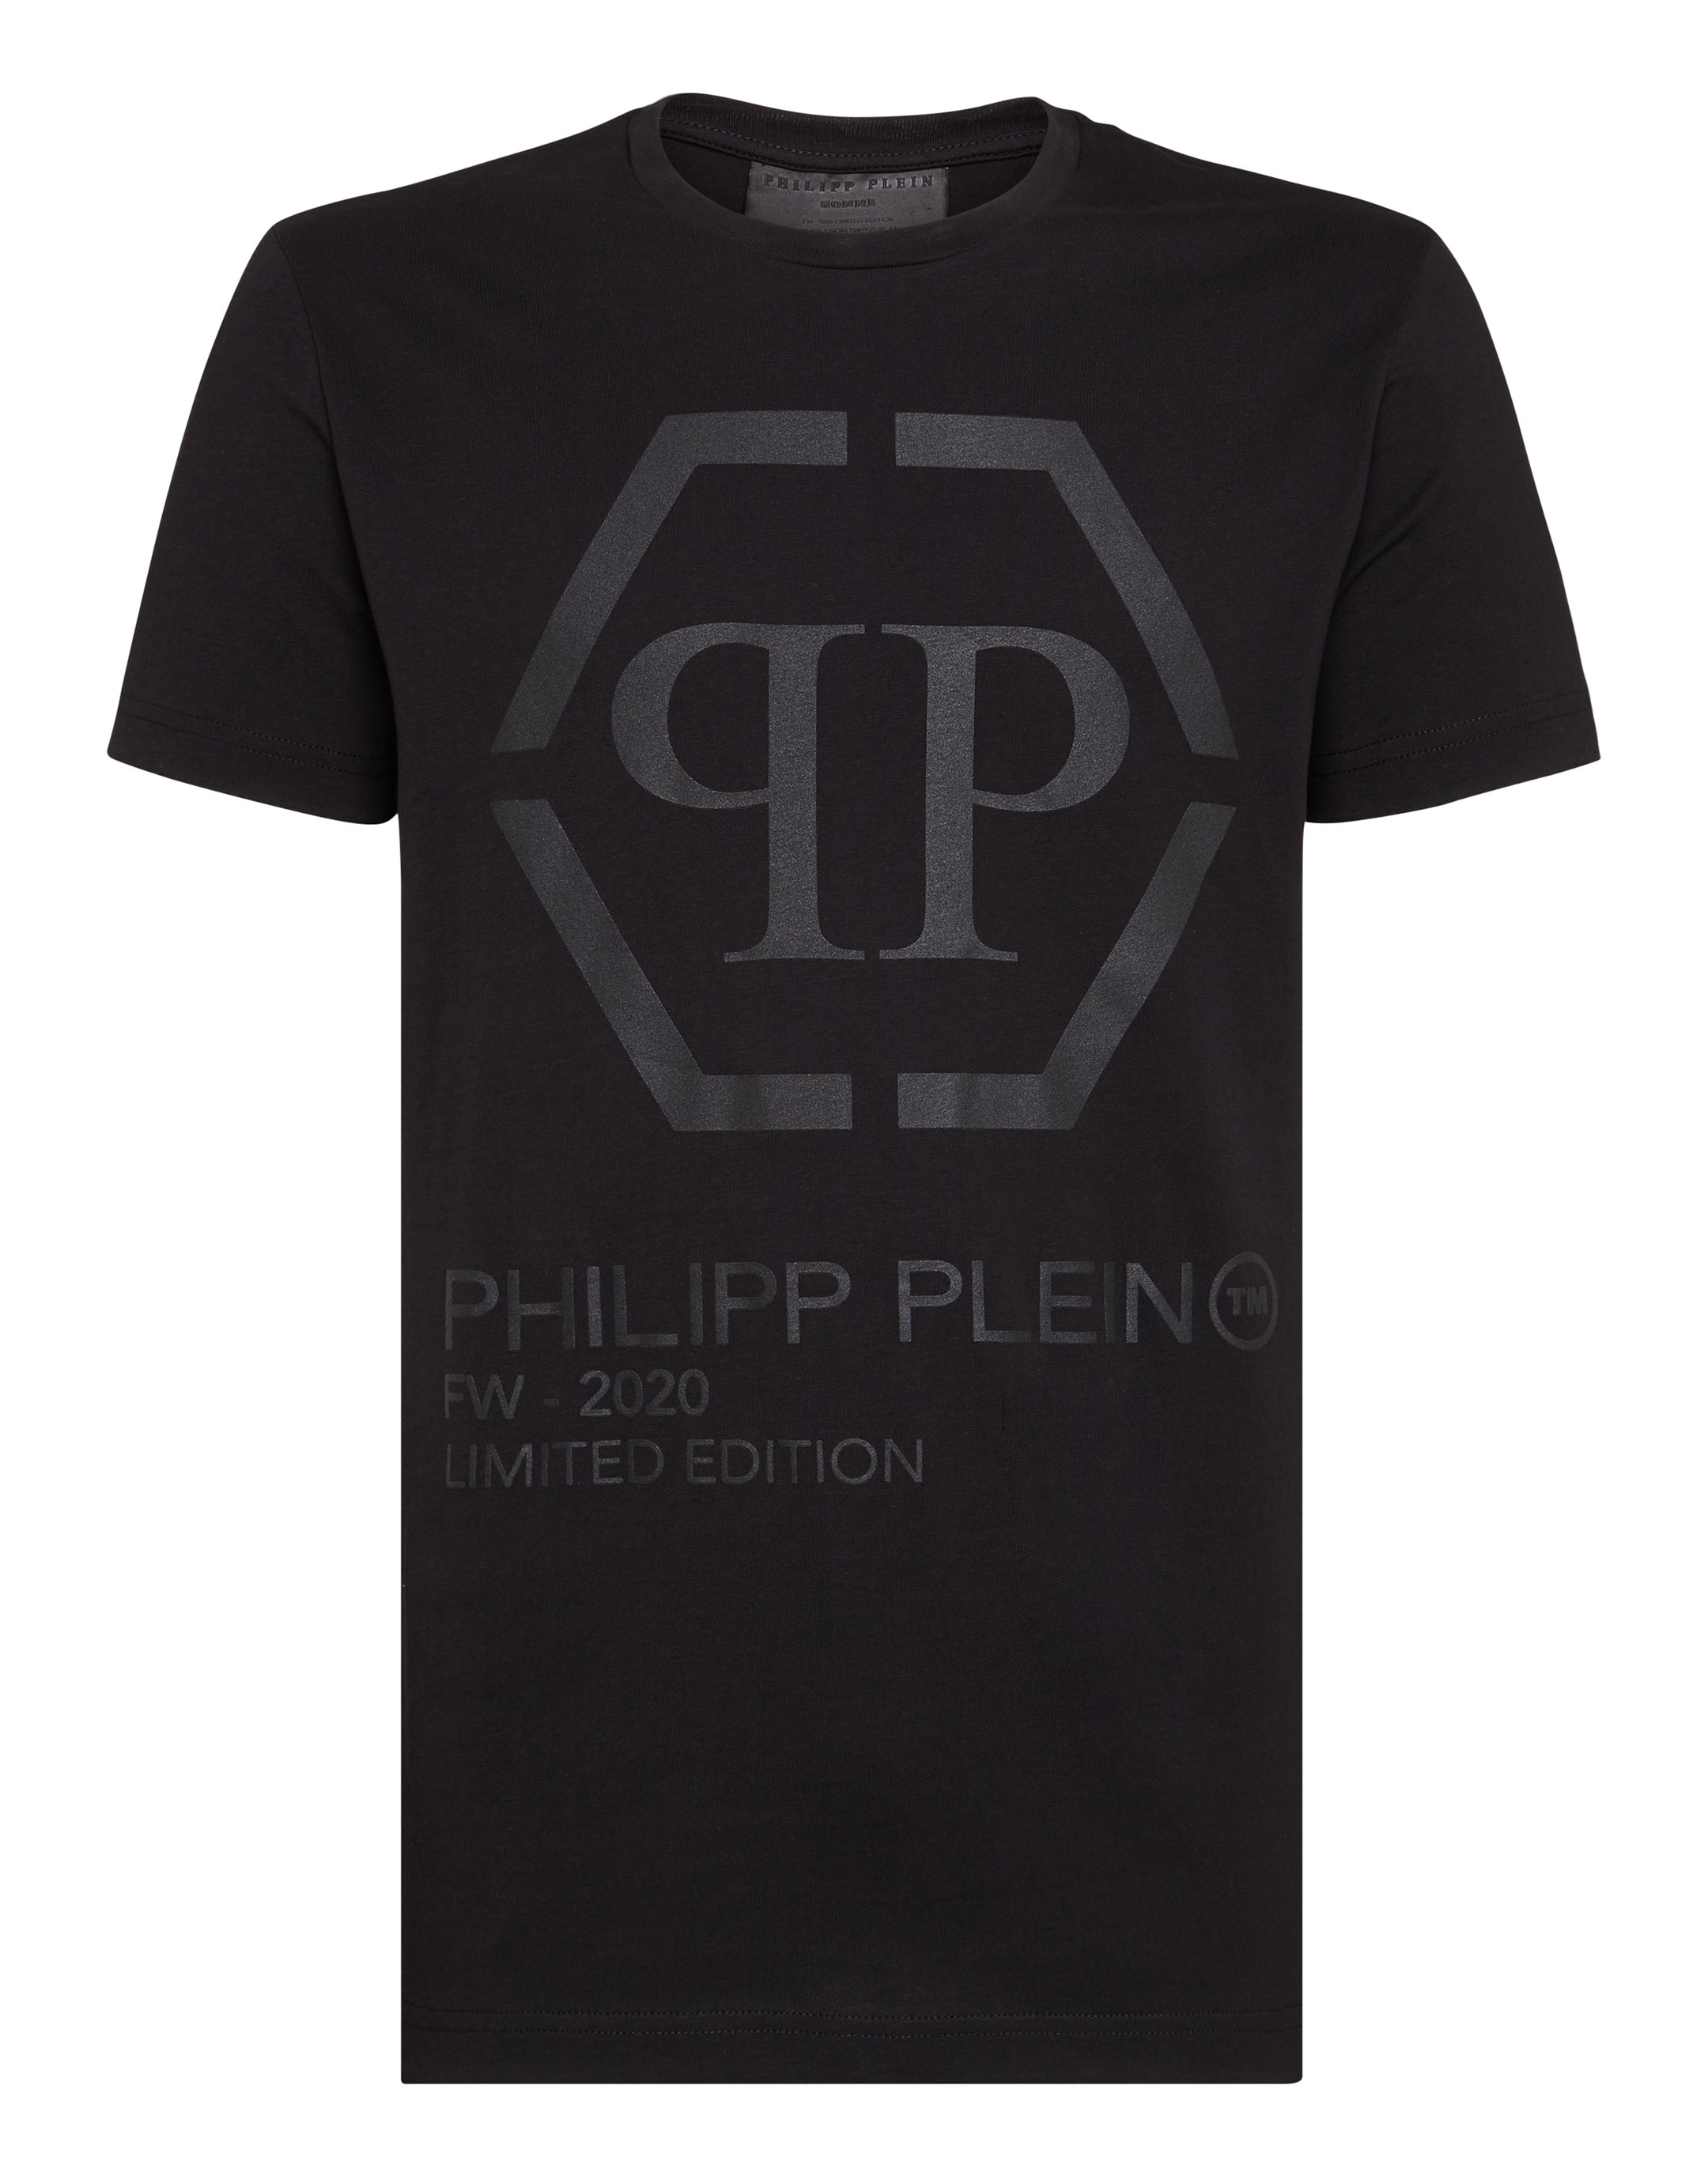 philipp plein t-shirt 2020